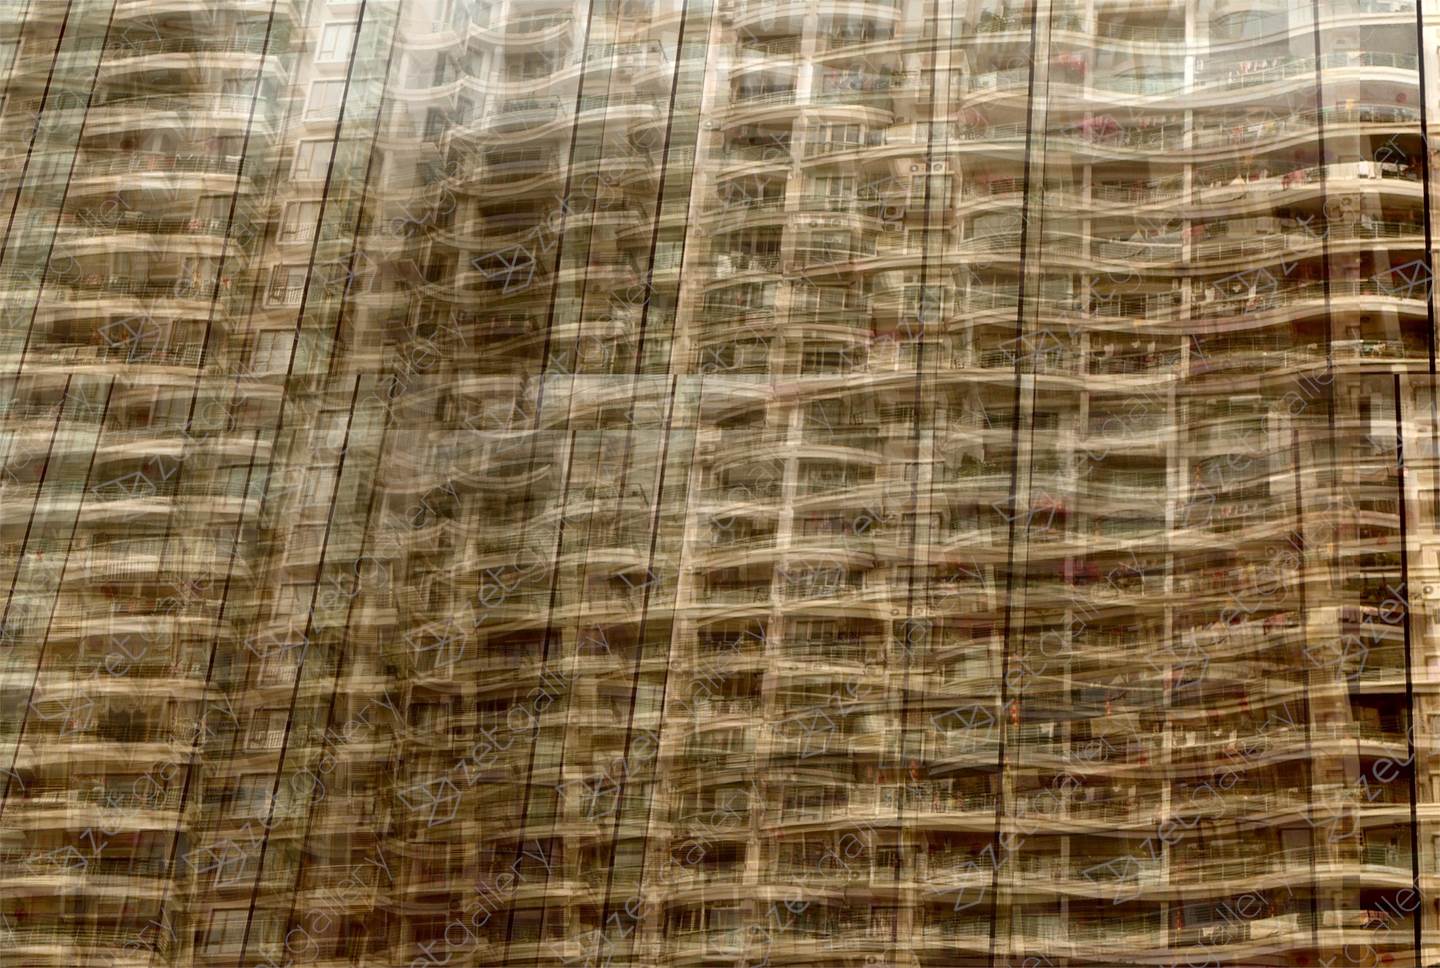 Shenzhen 2, original Architecture Digital Photography by John Brooks